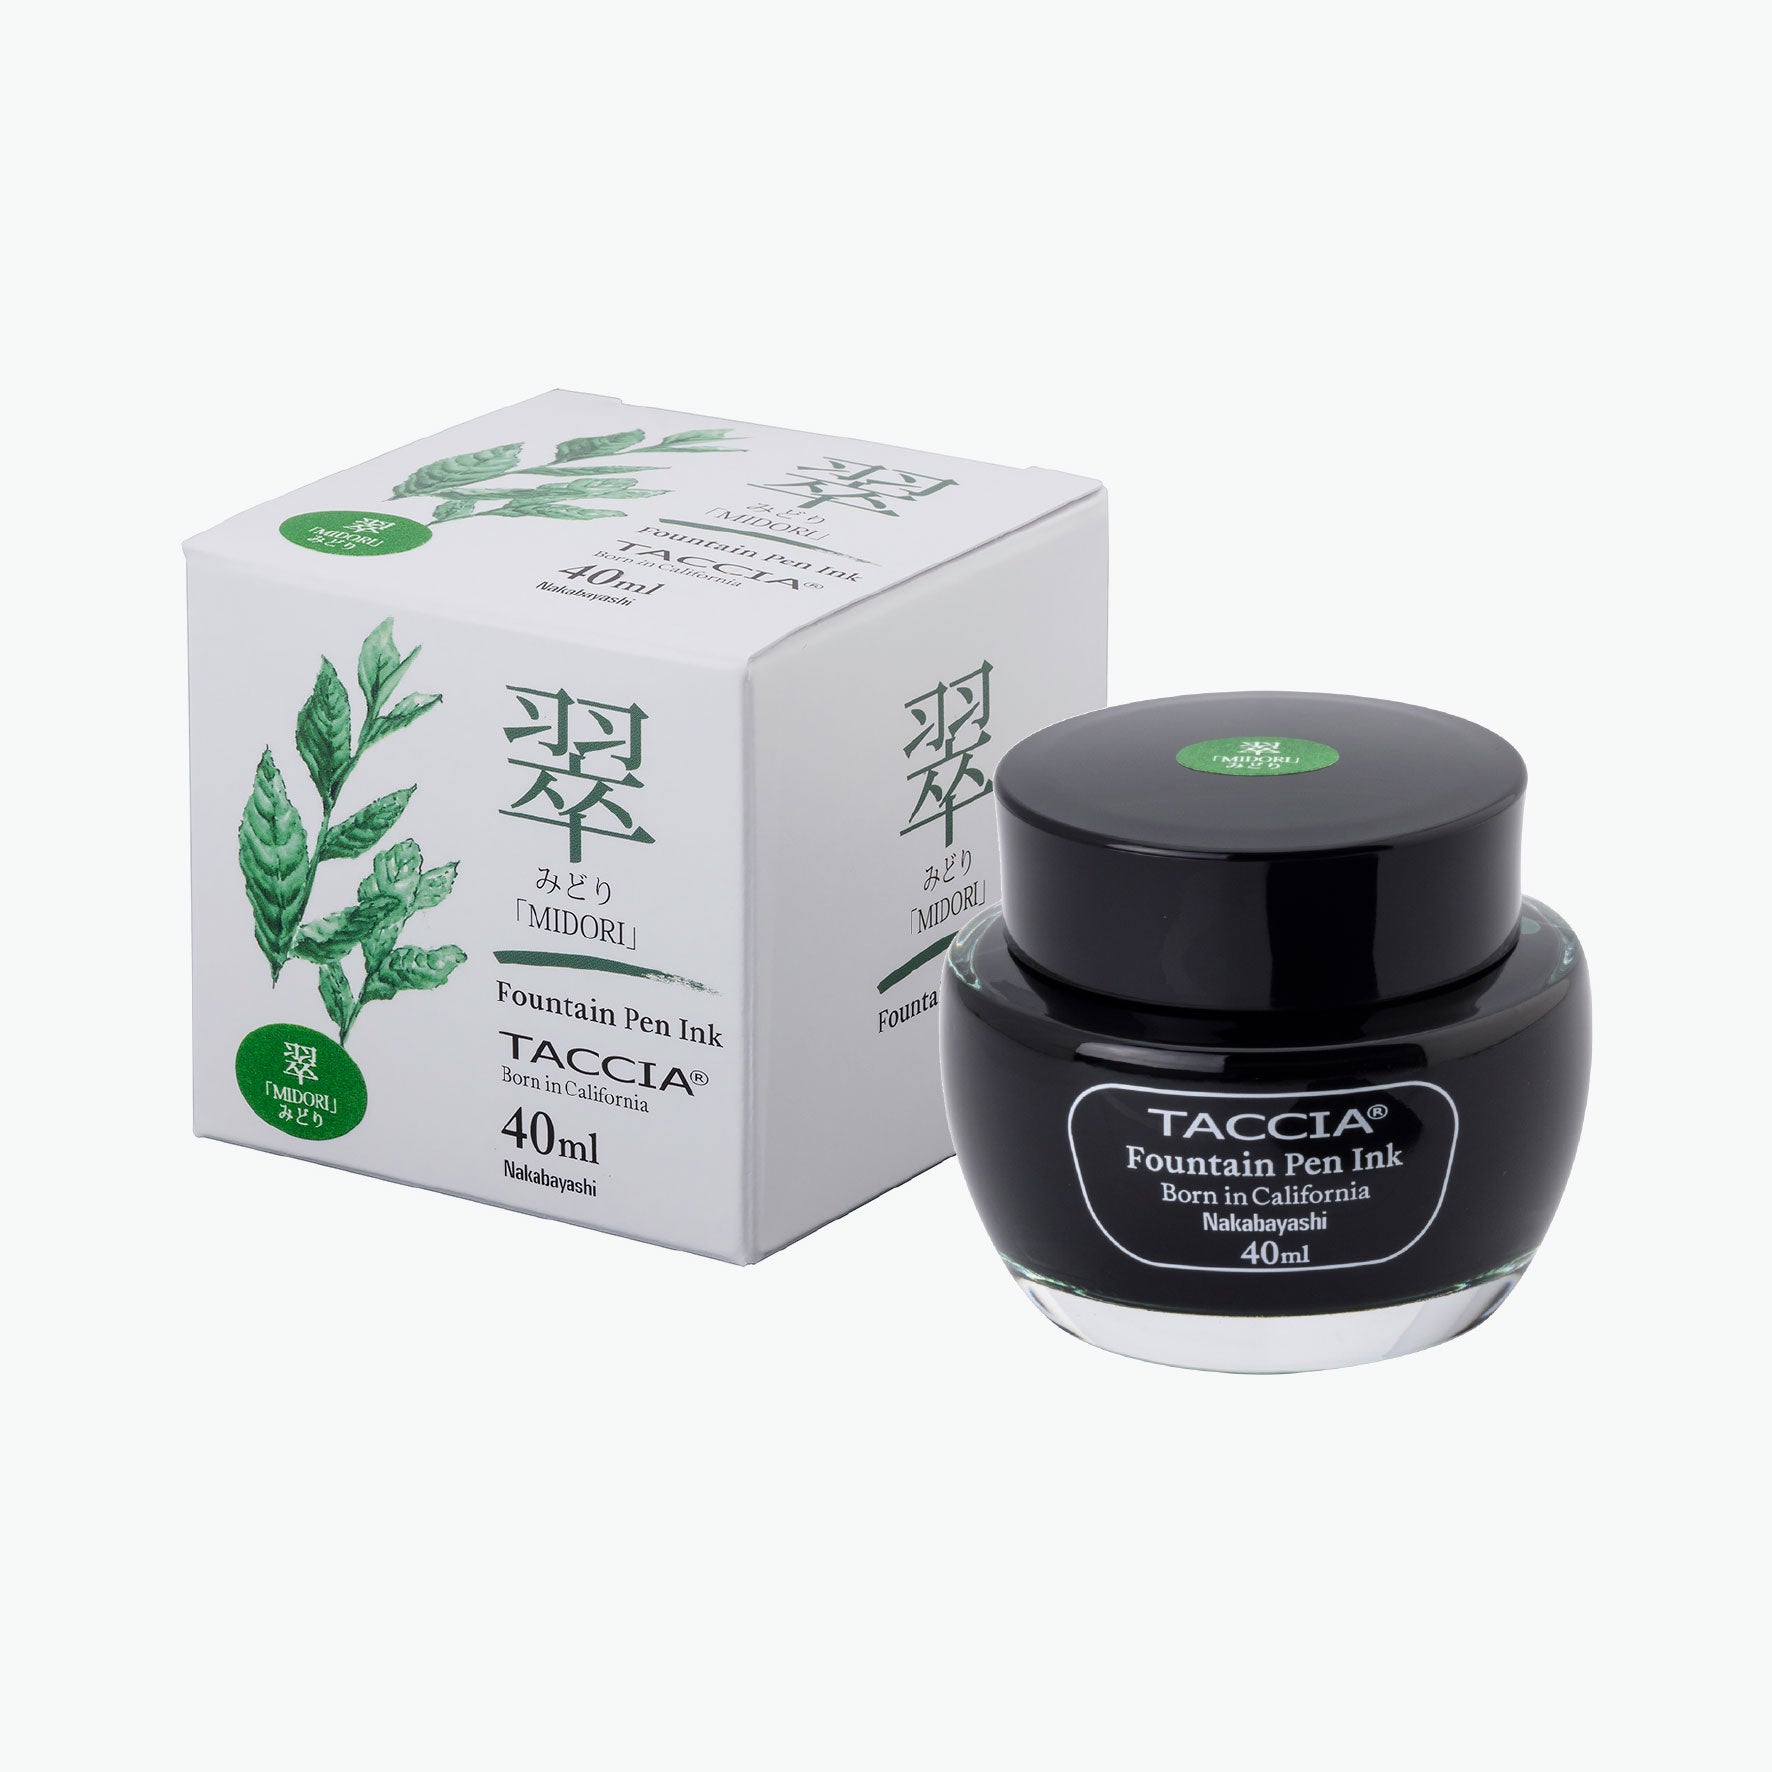 Taccia - Fountain Pen Ink - Standard - Midori (Green)